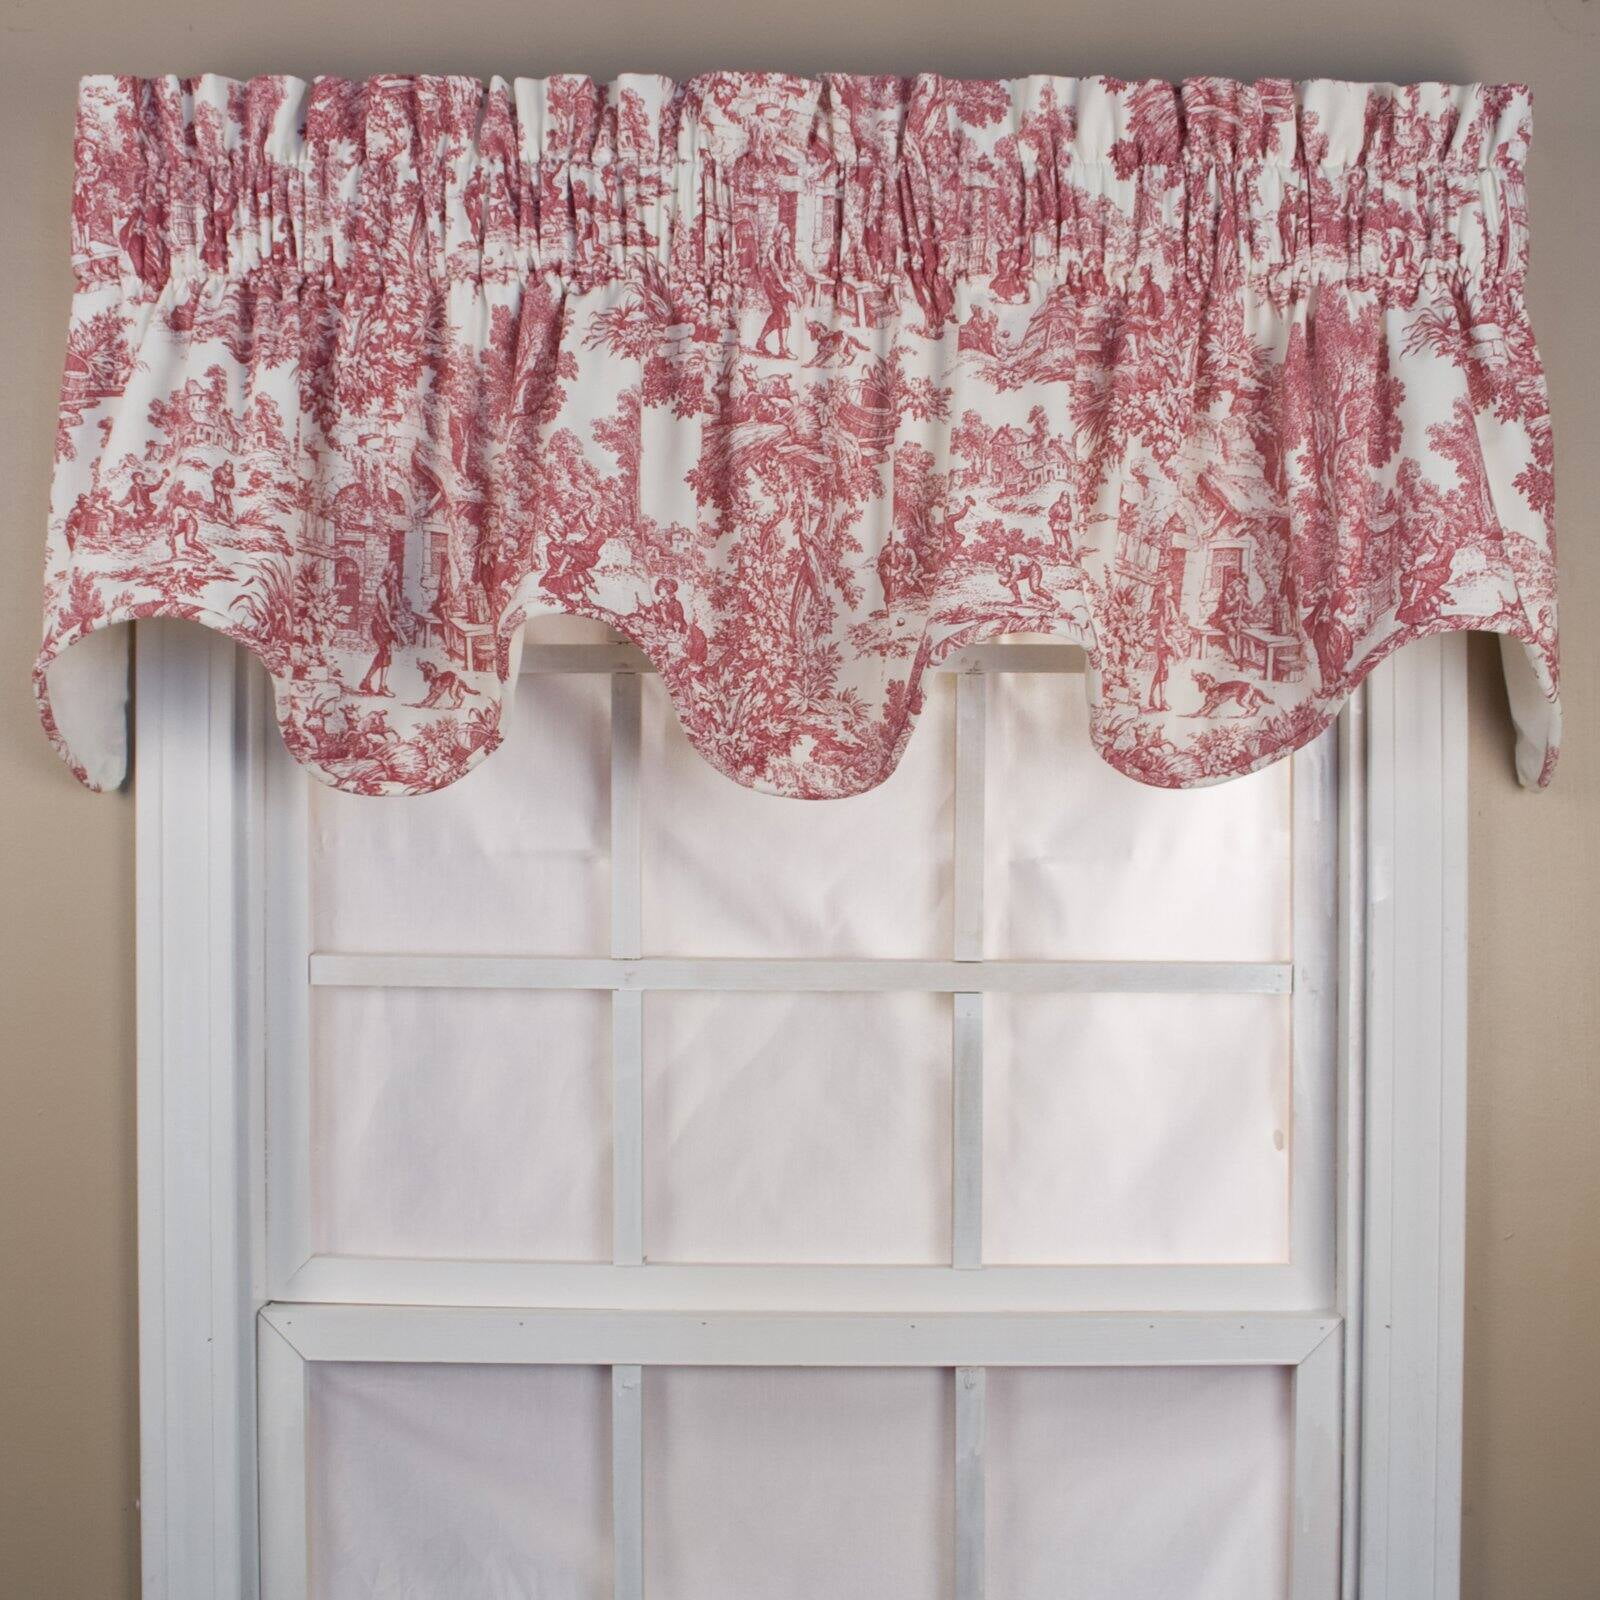 60" x 19" Cherry Blossom Embroidery Window Single Panel Curtain Valance 